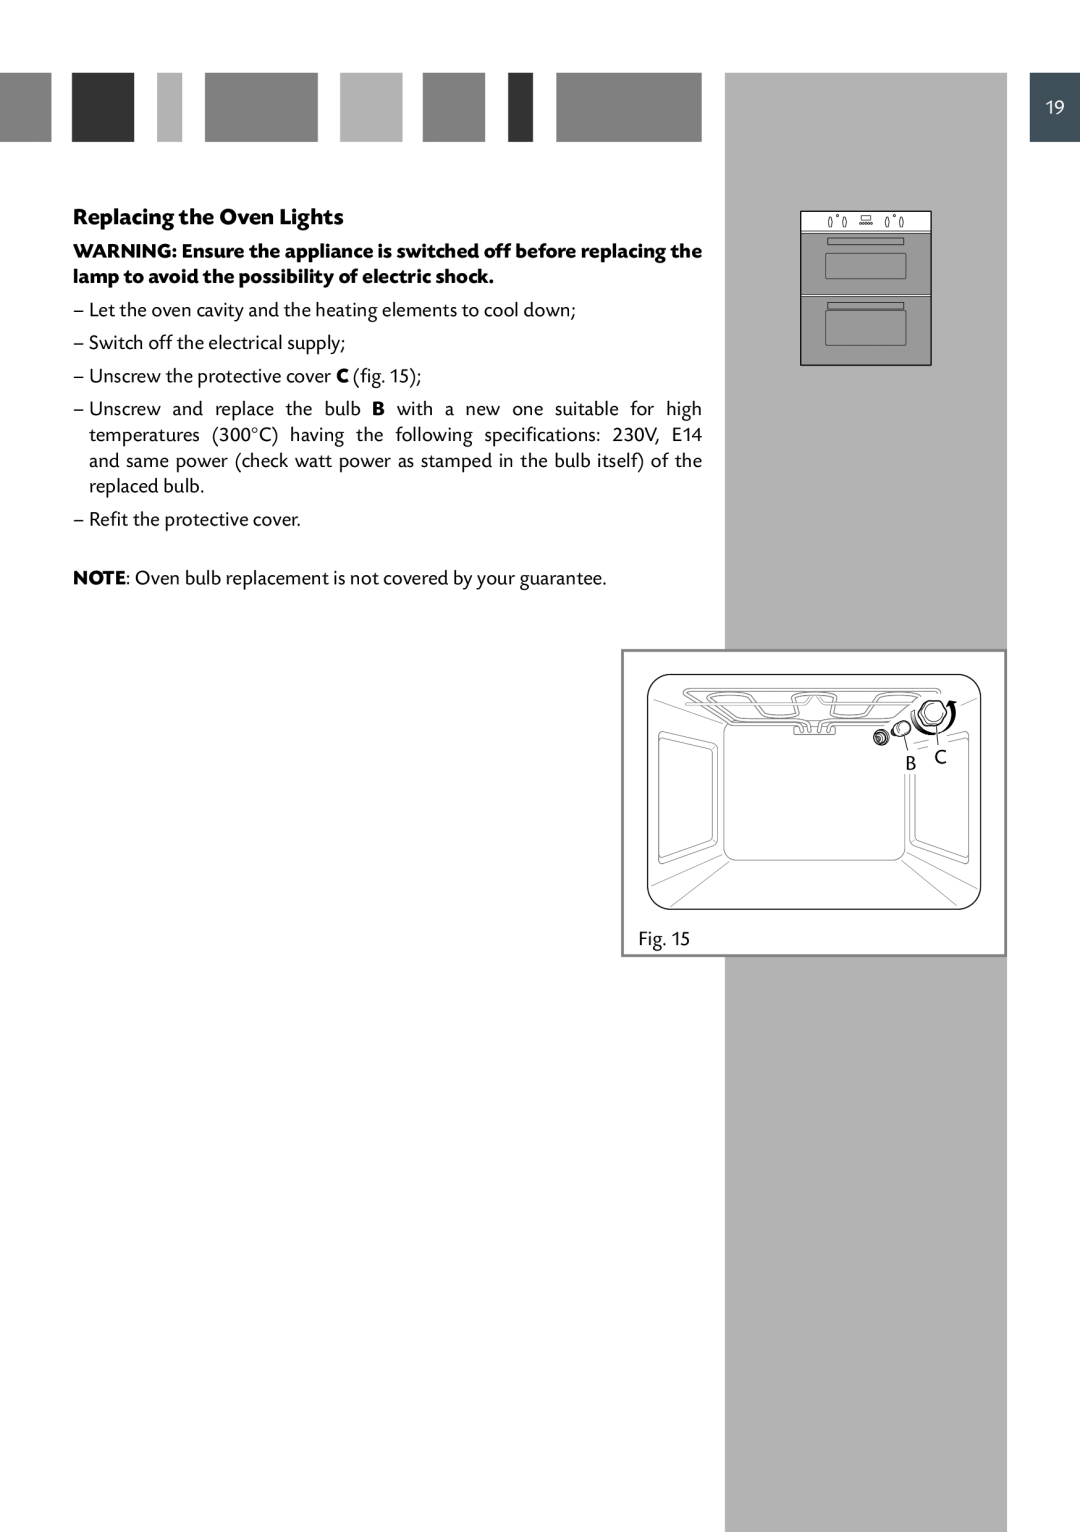 CDA DC730 manual Replacing the Oven Lights 